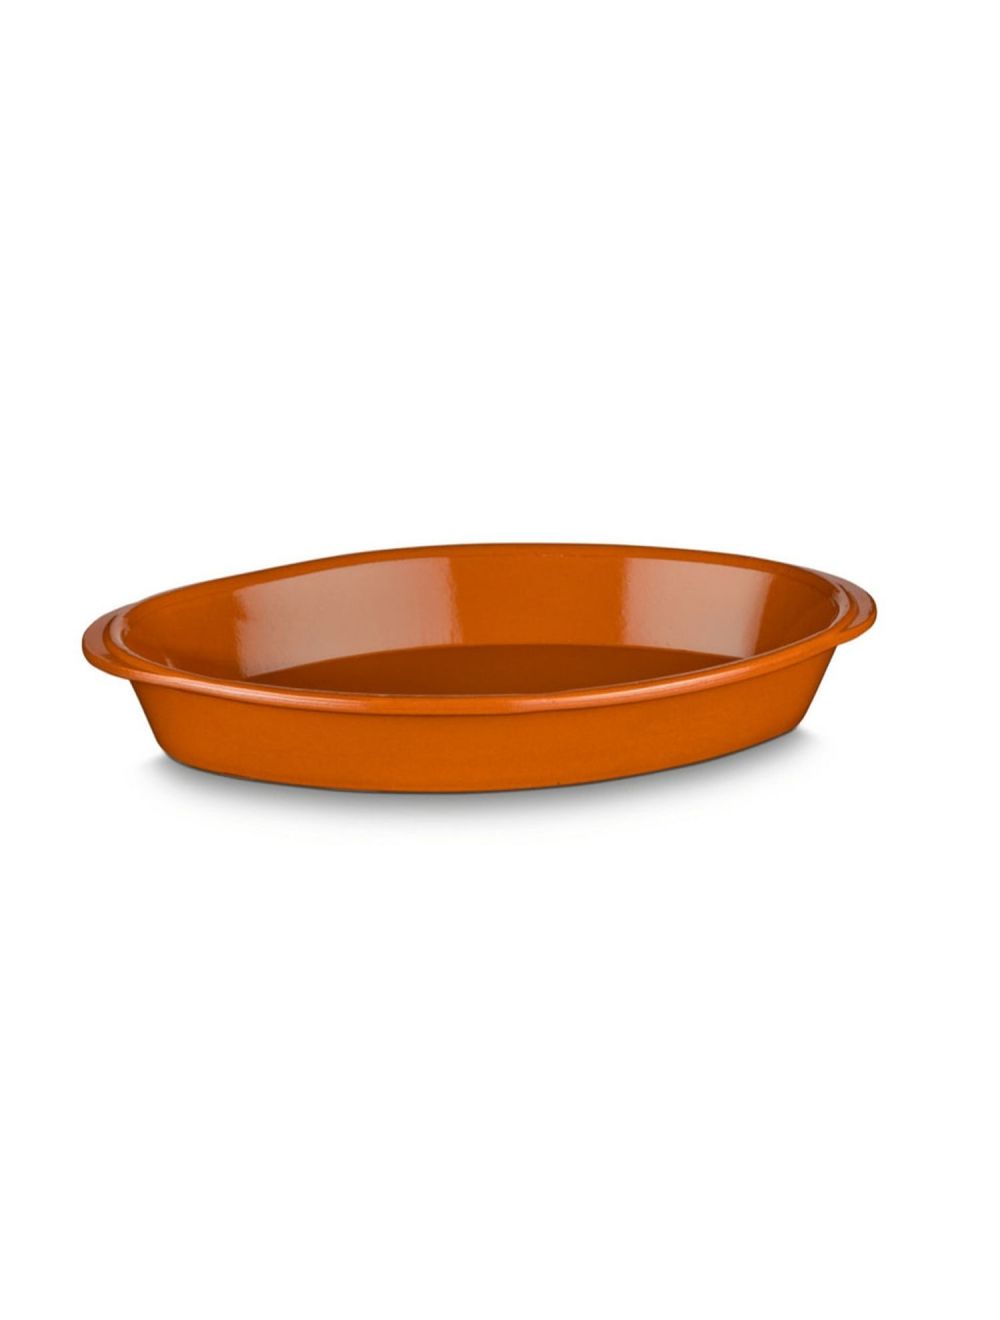 Regas Oval Dish #501 -BACPL87003